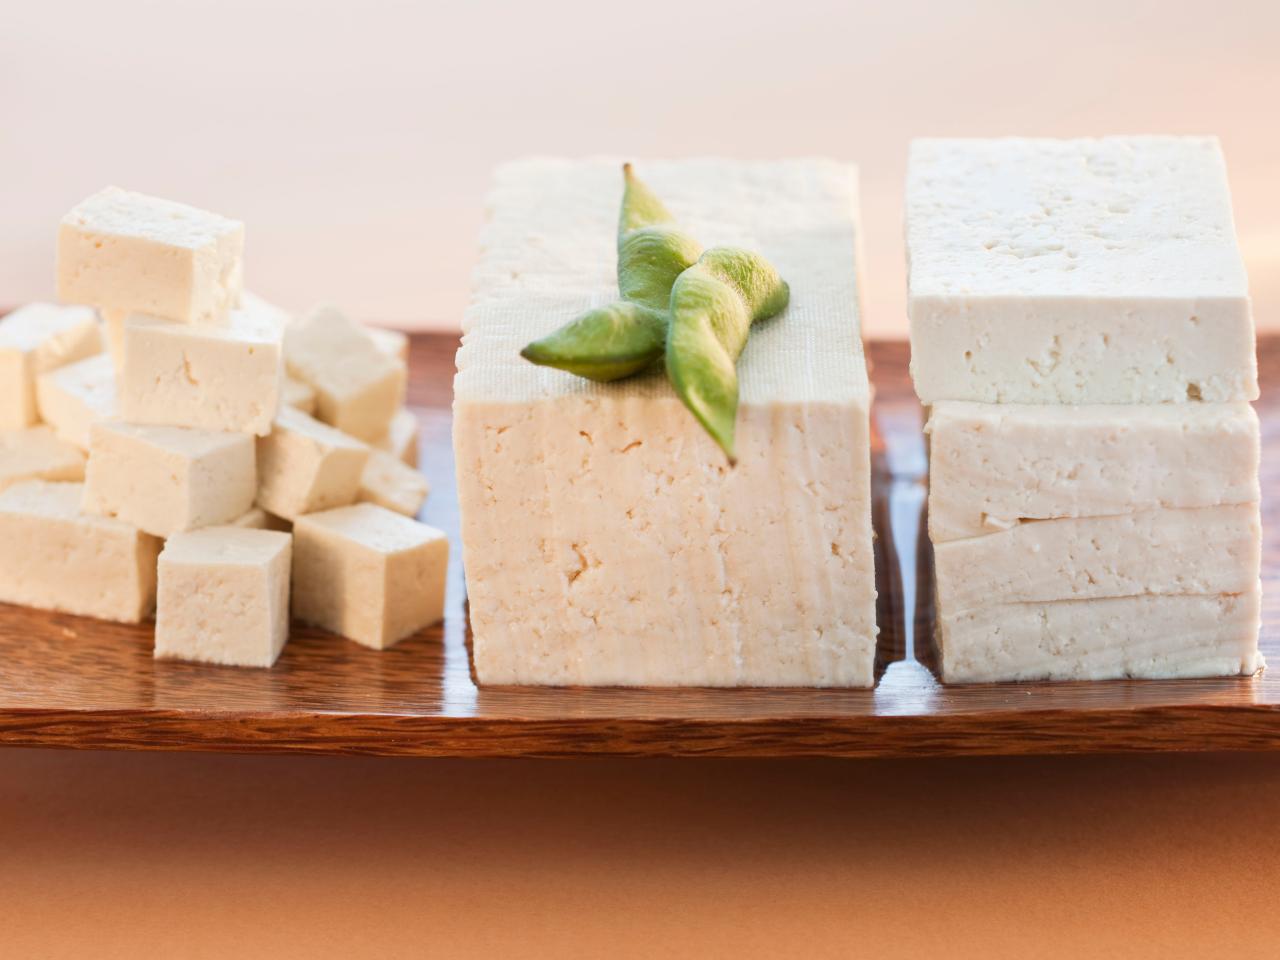 Tofu Press Tofuture's Tofu Press to transform your tofu